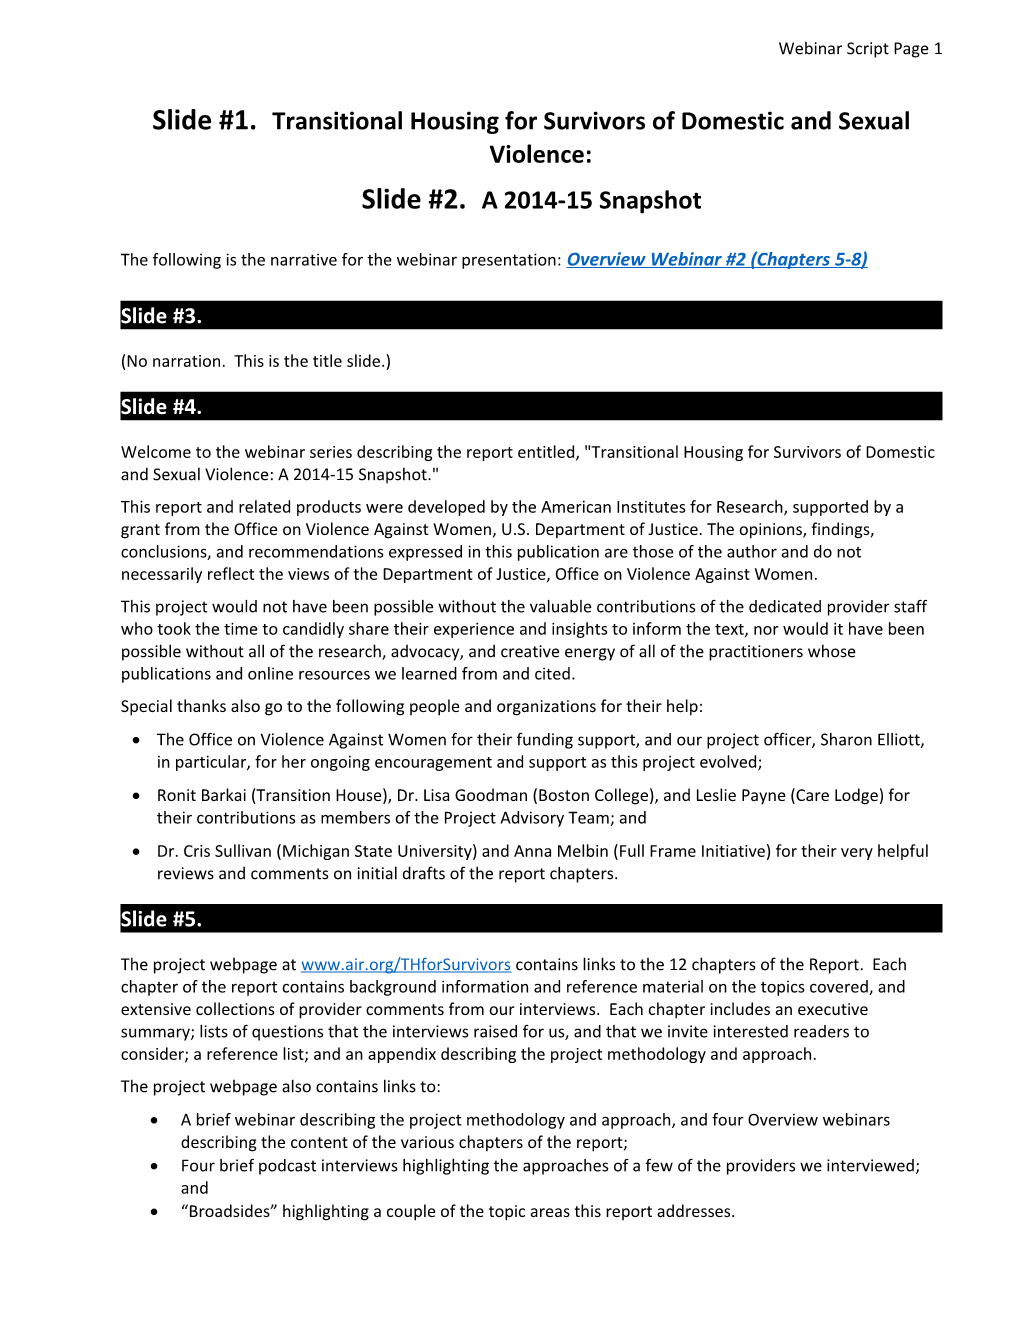 TH for Survivors Snapshot 2014-15 - Overview Webinar #2 (Chapters 5-8) Webinar Script